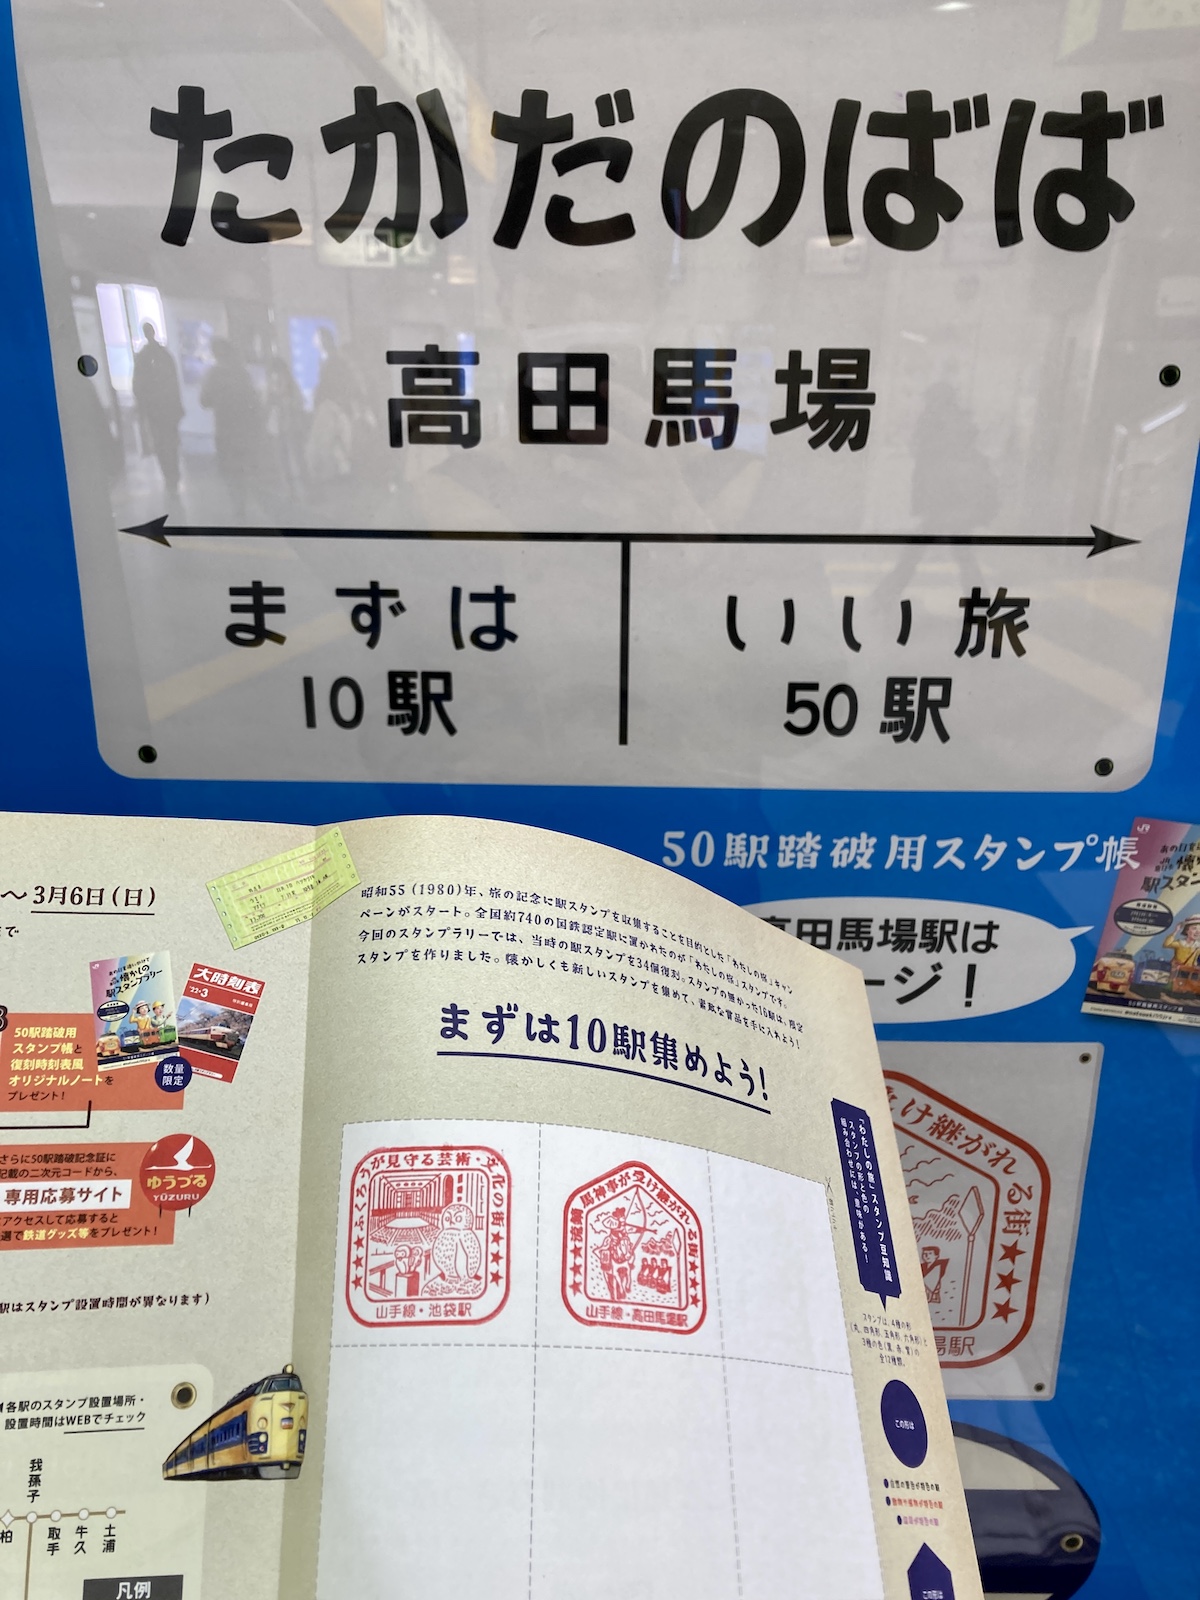 JR東日本「懐かしの駅スタンプラリー」がレトロ過ぎて最高！ 出勤前の1時間で10駅分集めて記念品をゲットしたぞォォオオオ！ | ロケットニュース24